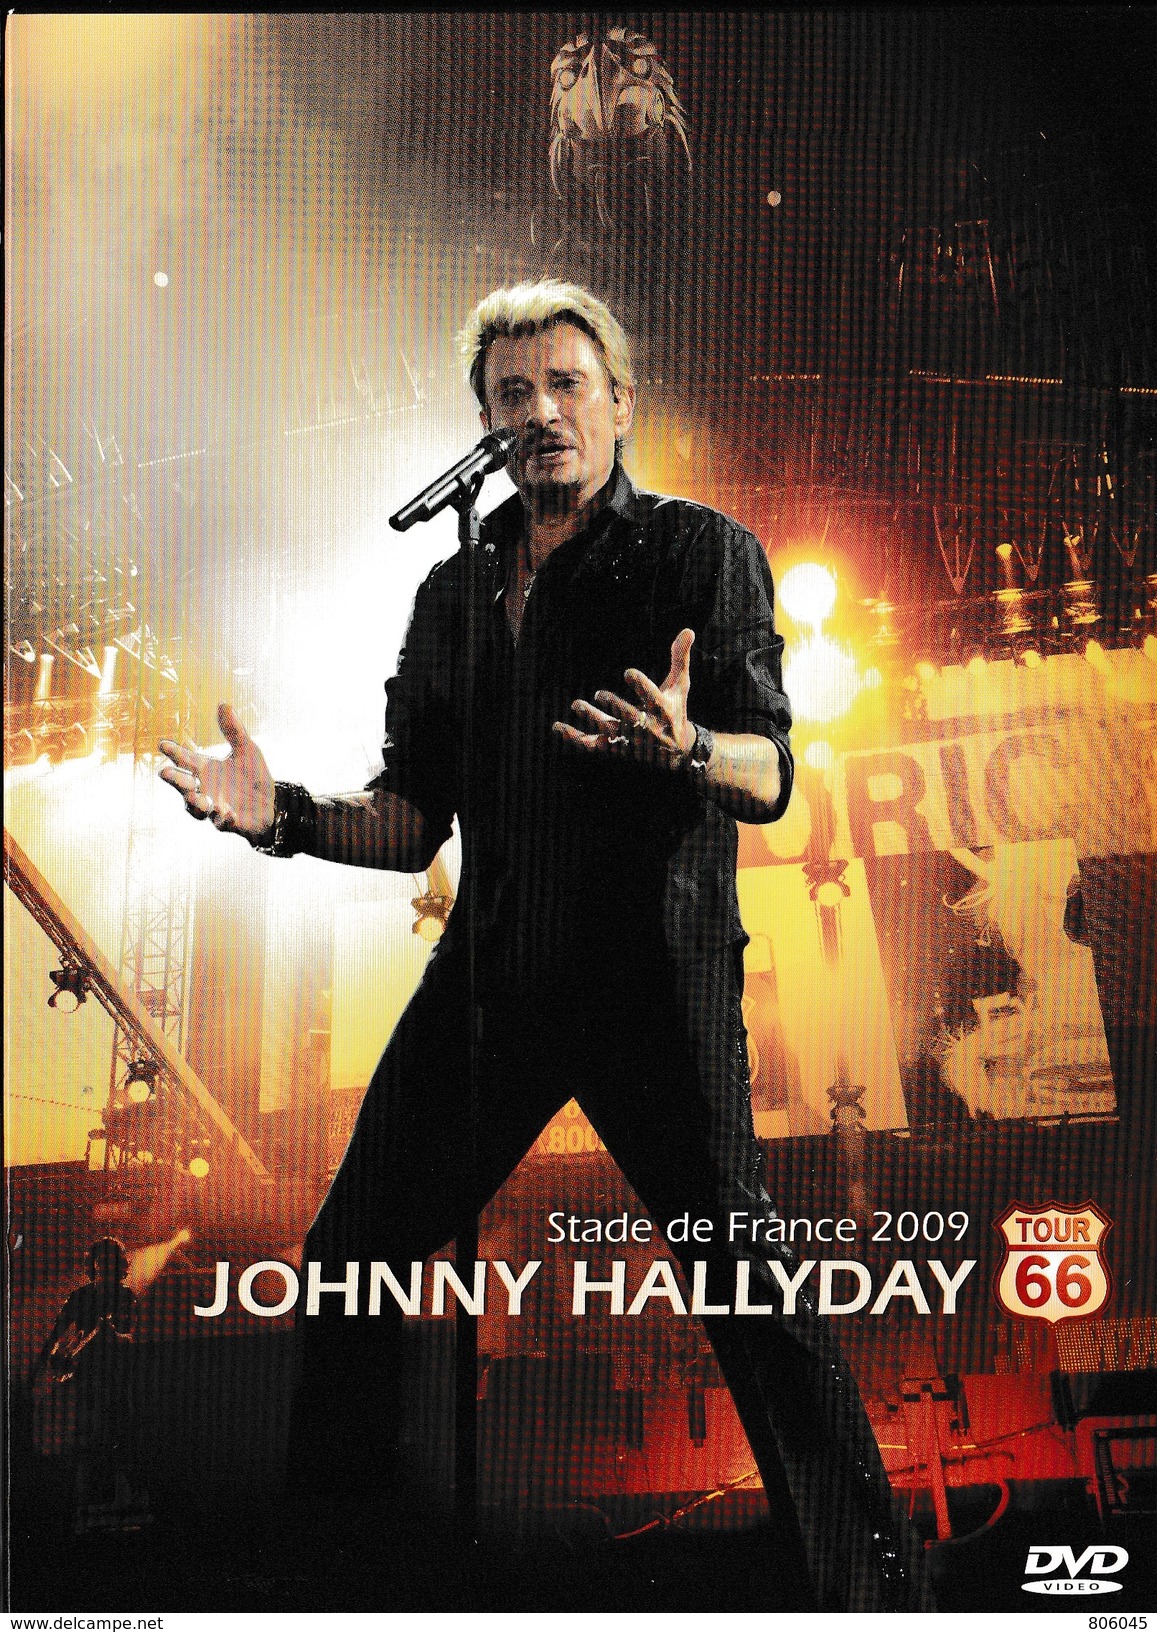 Johnny Hallyday Tour 66 - DVD Musicales